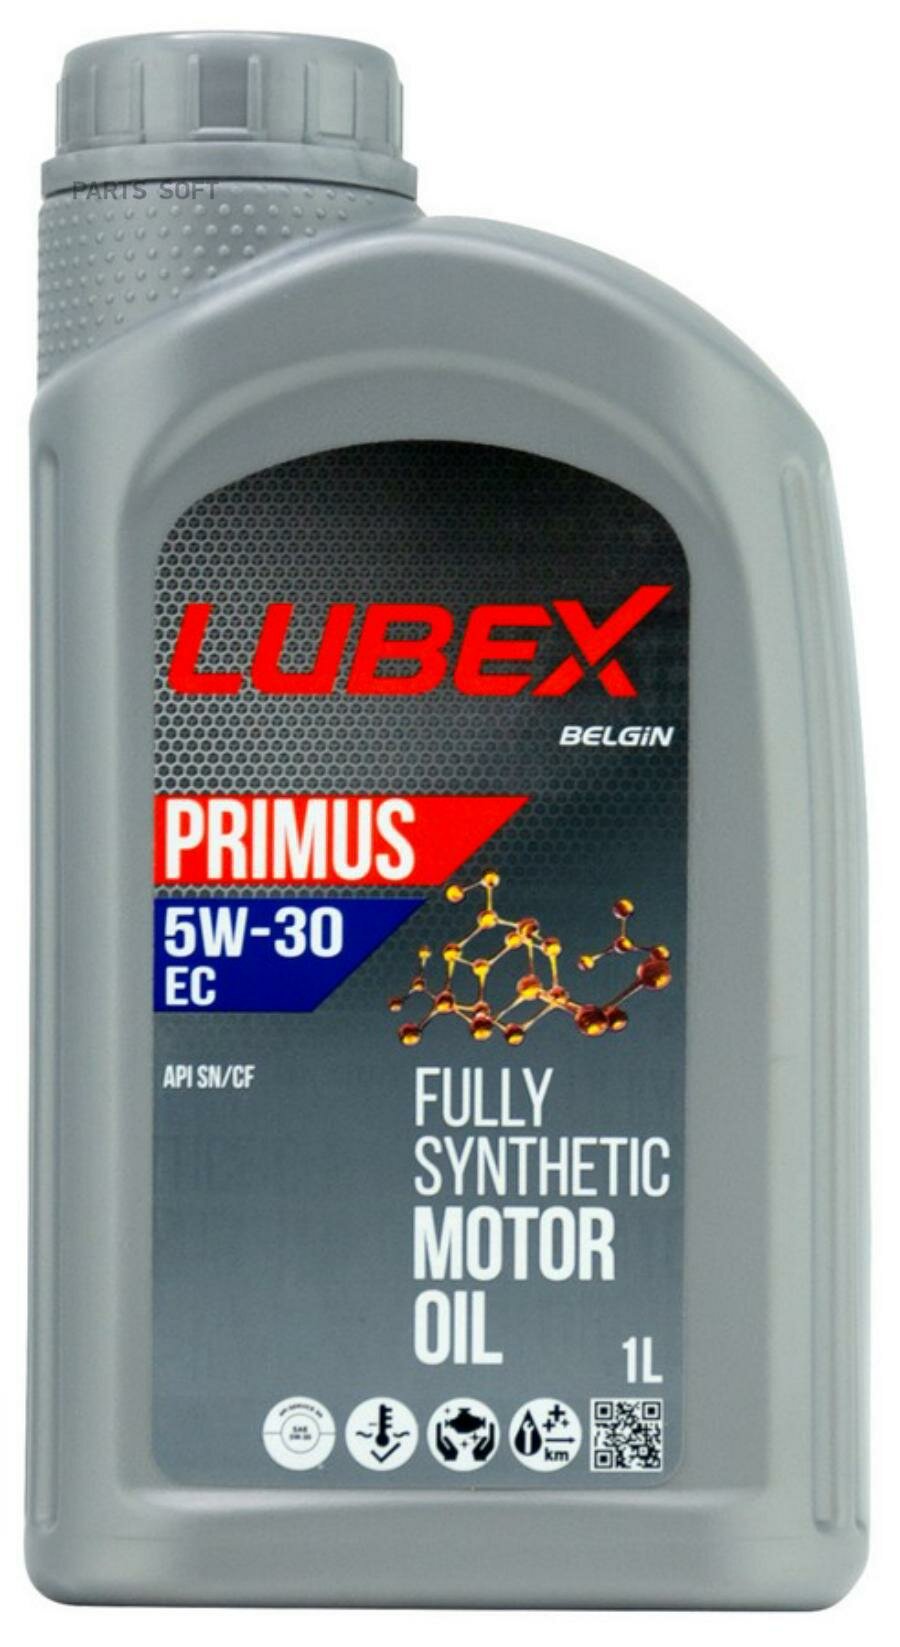 Lubex primus ec 5w30 (1l)_масло моторное! синт.\api sn, api cf